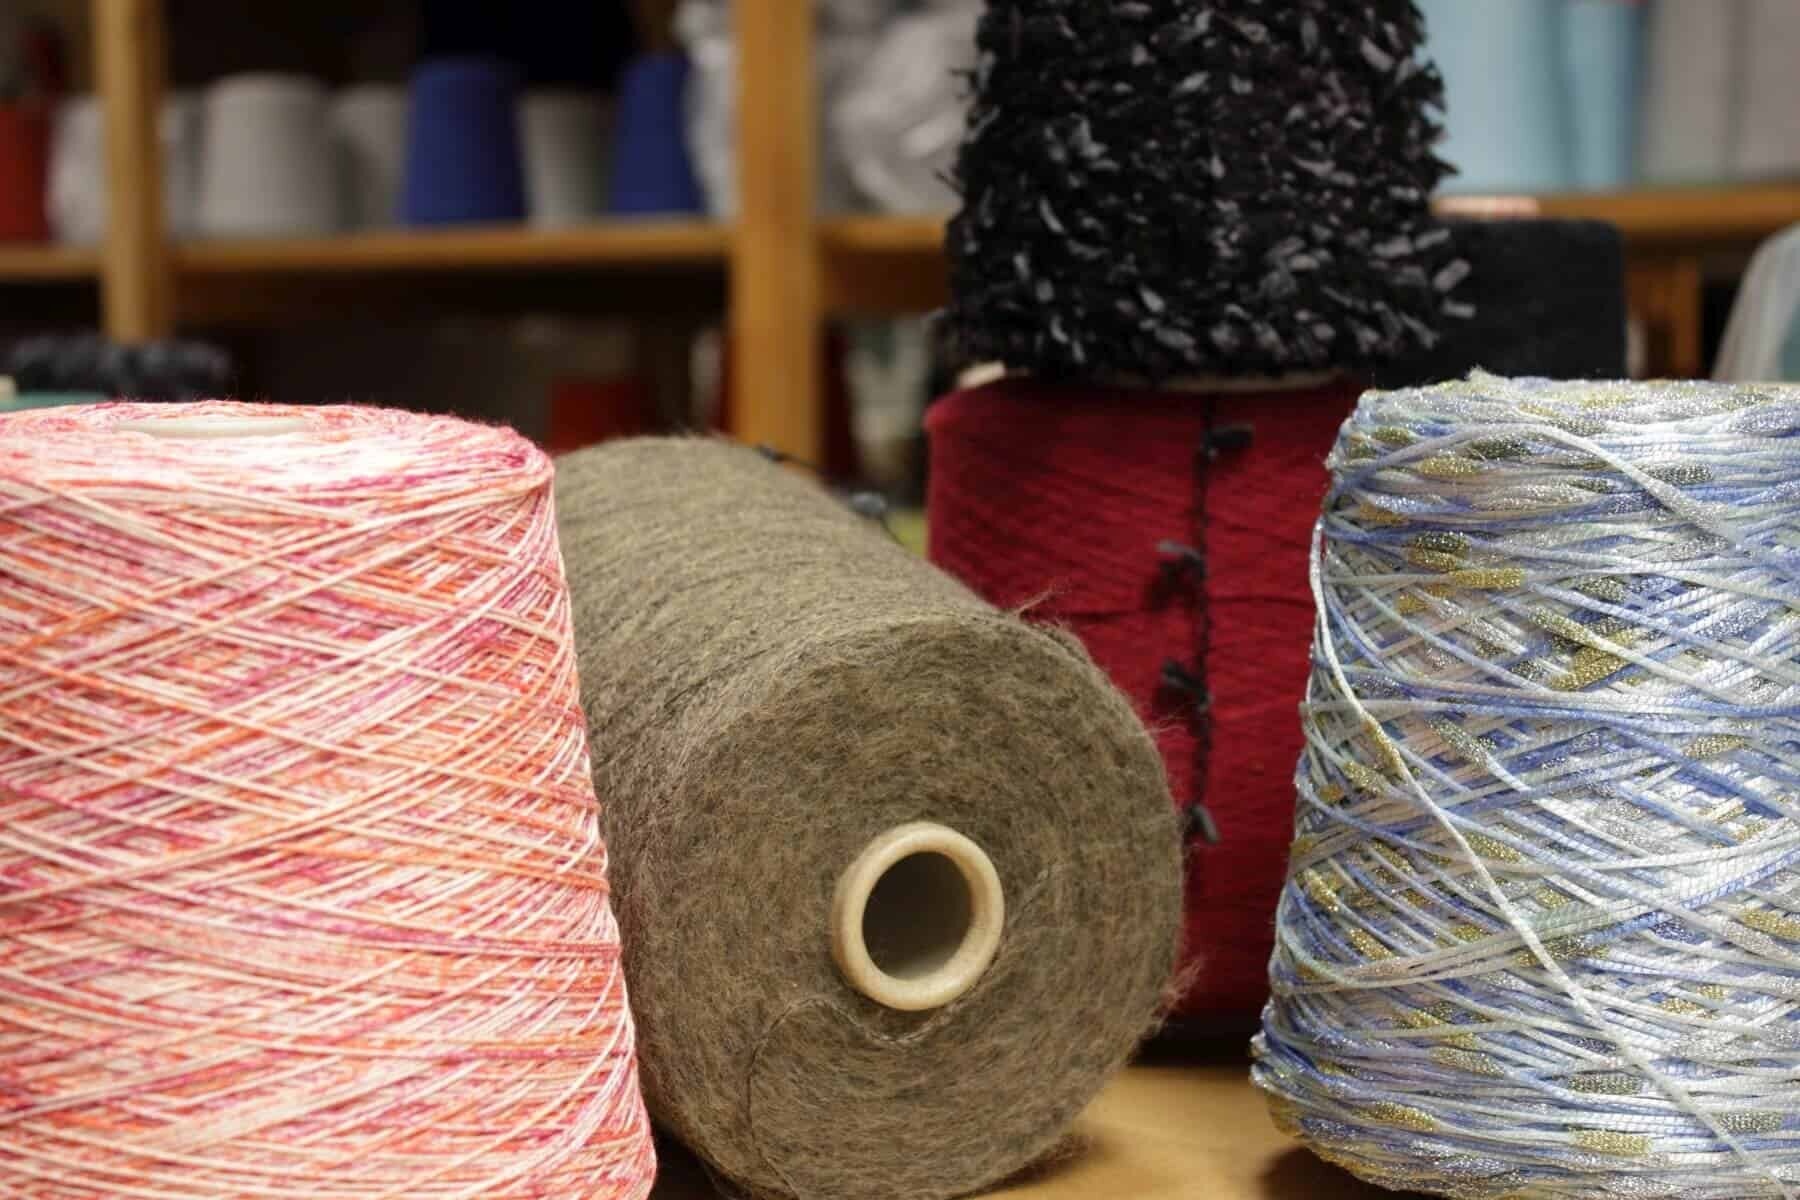 Maschinenstrickgarn - machine knitting yarn